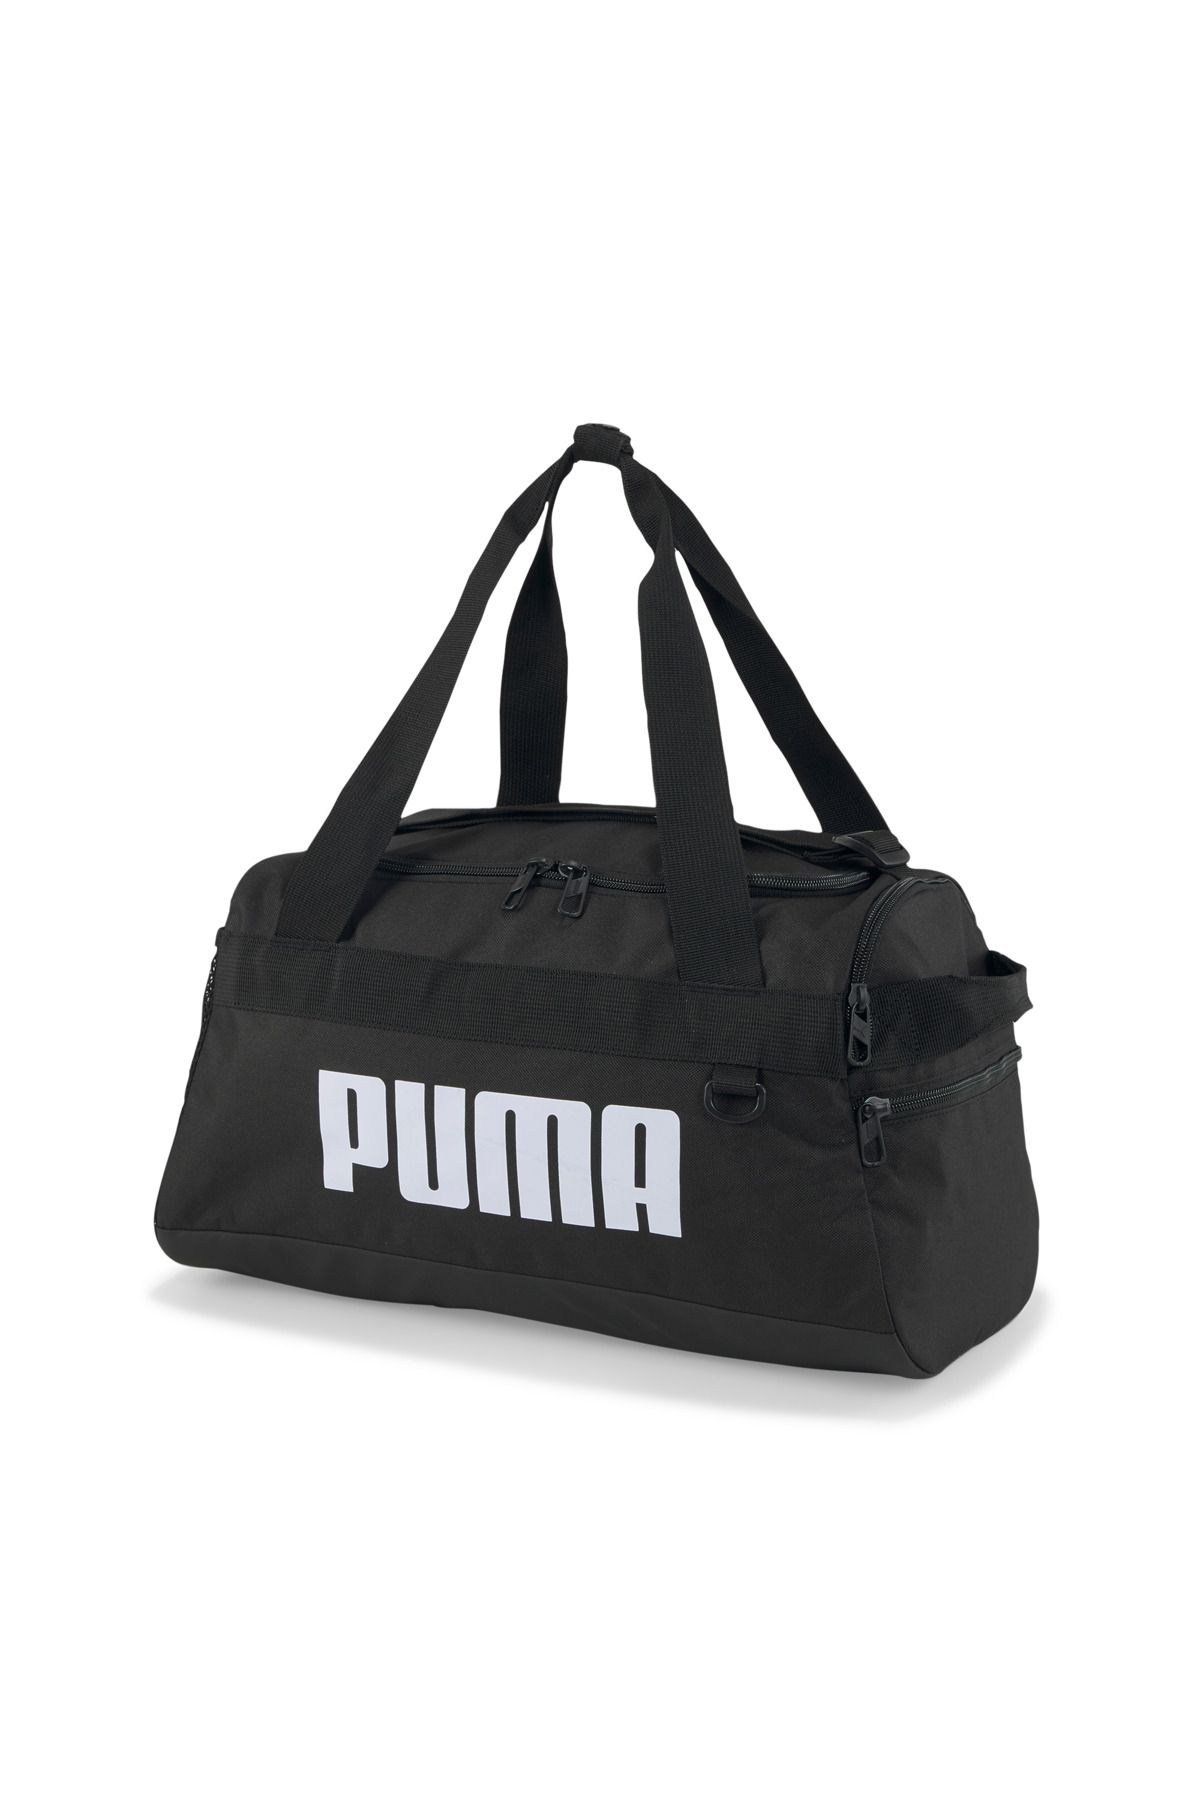 Puma Challenger Duffel Bag XS07952901